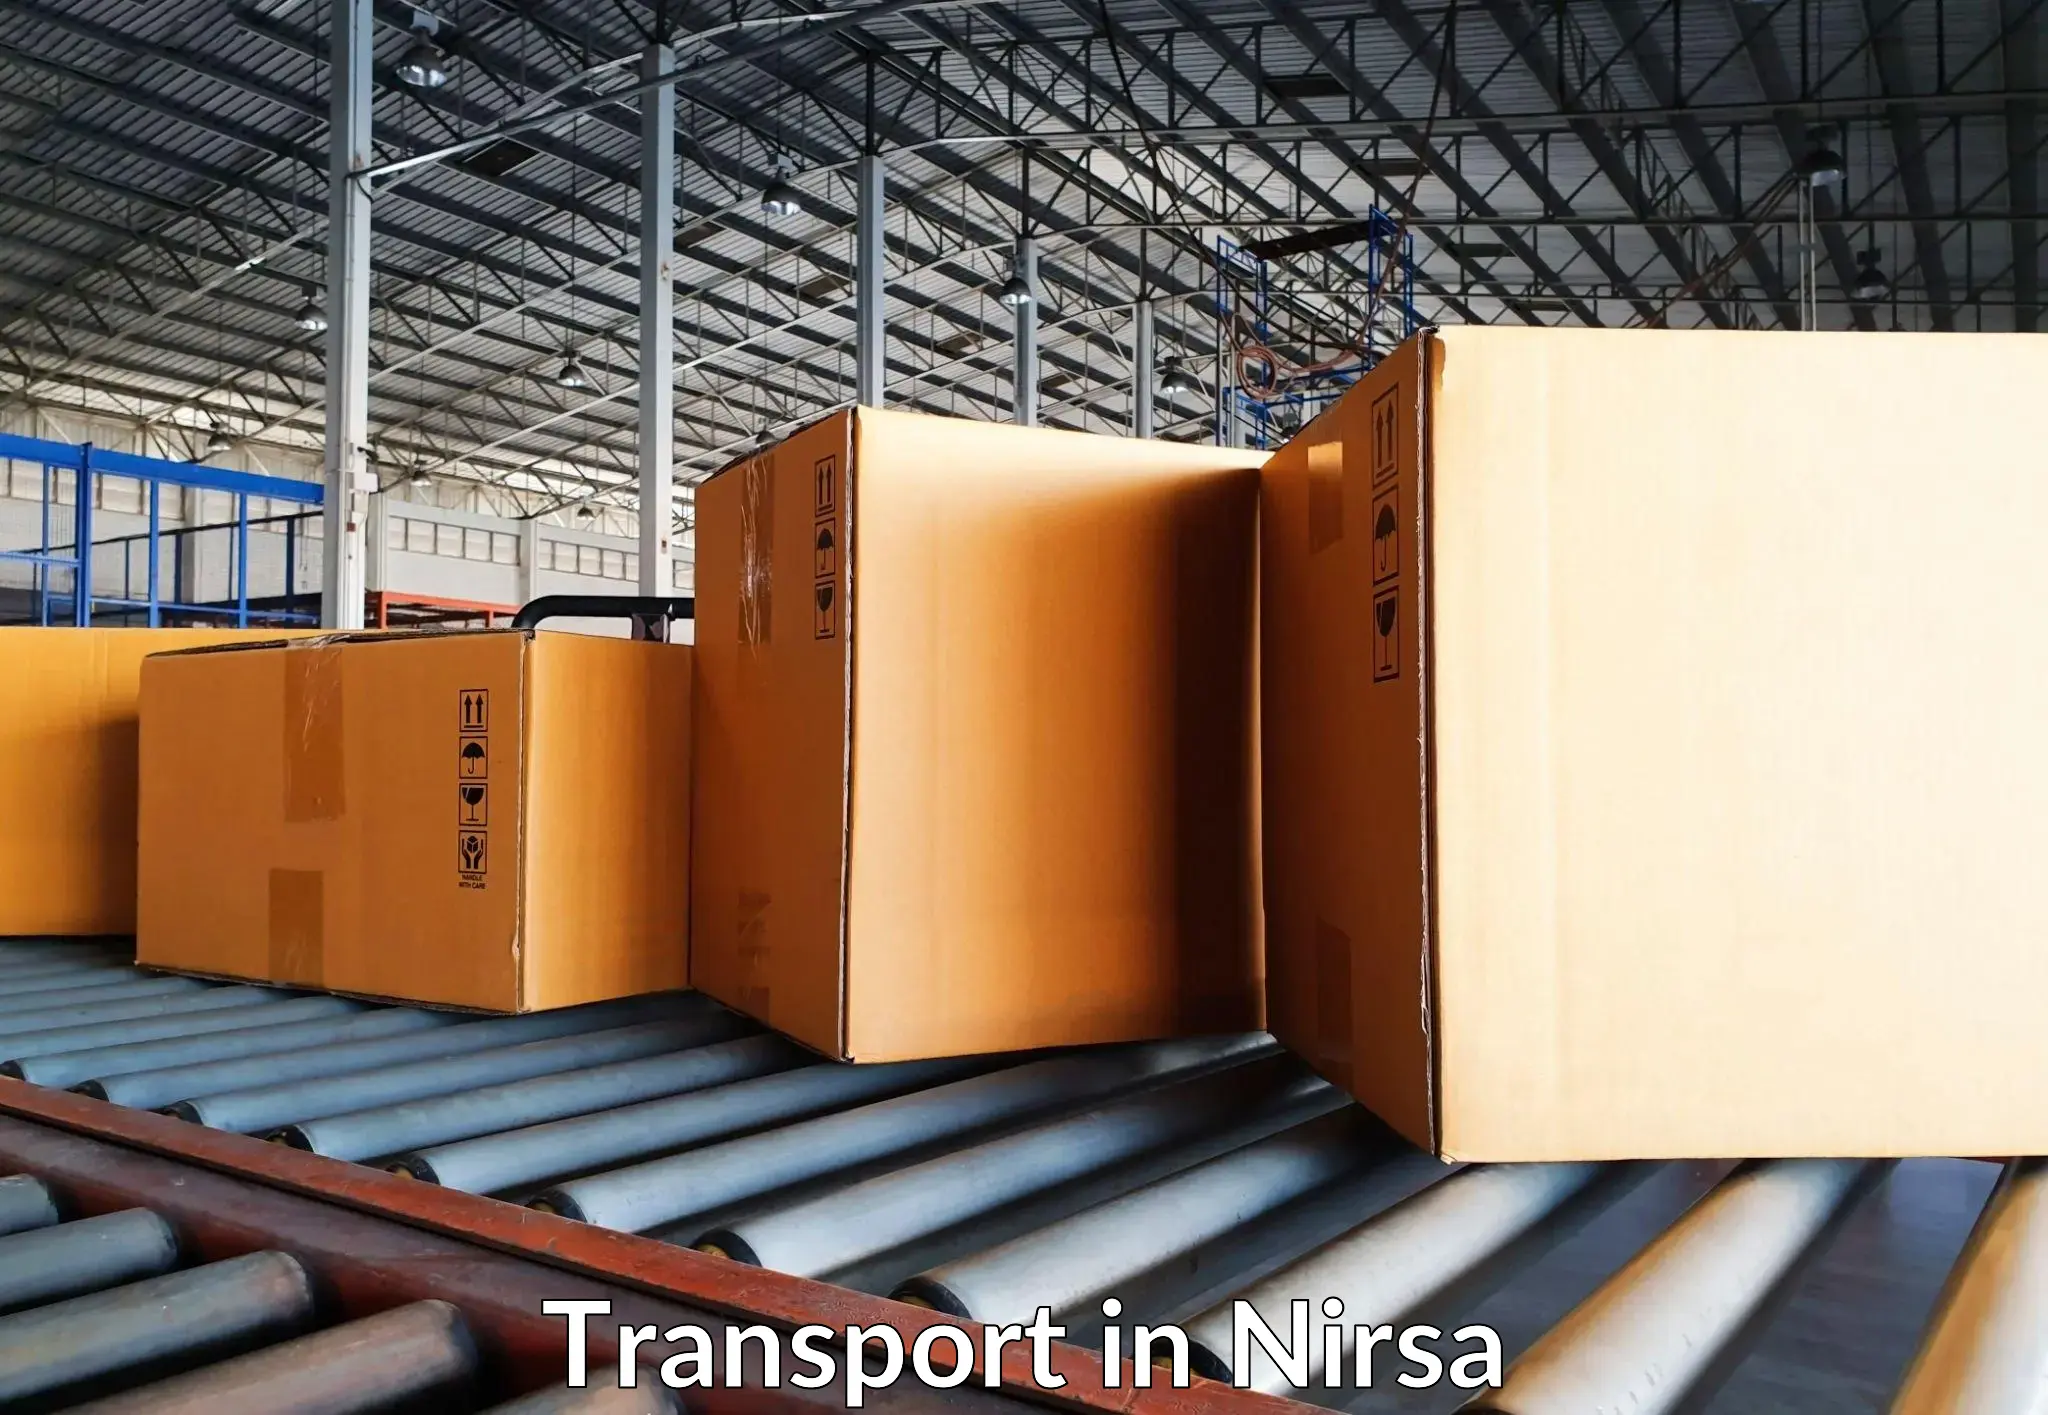 Transport in sharing in Nirsa